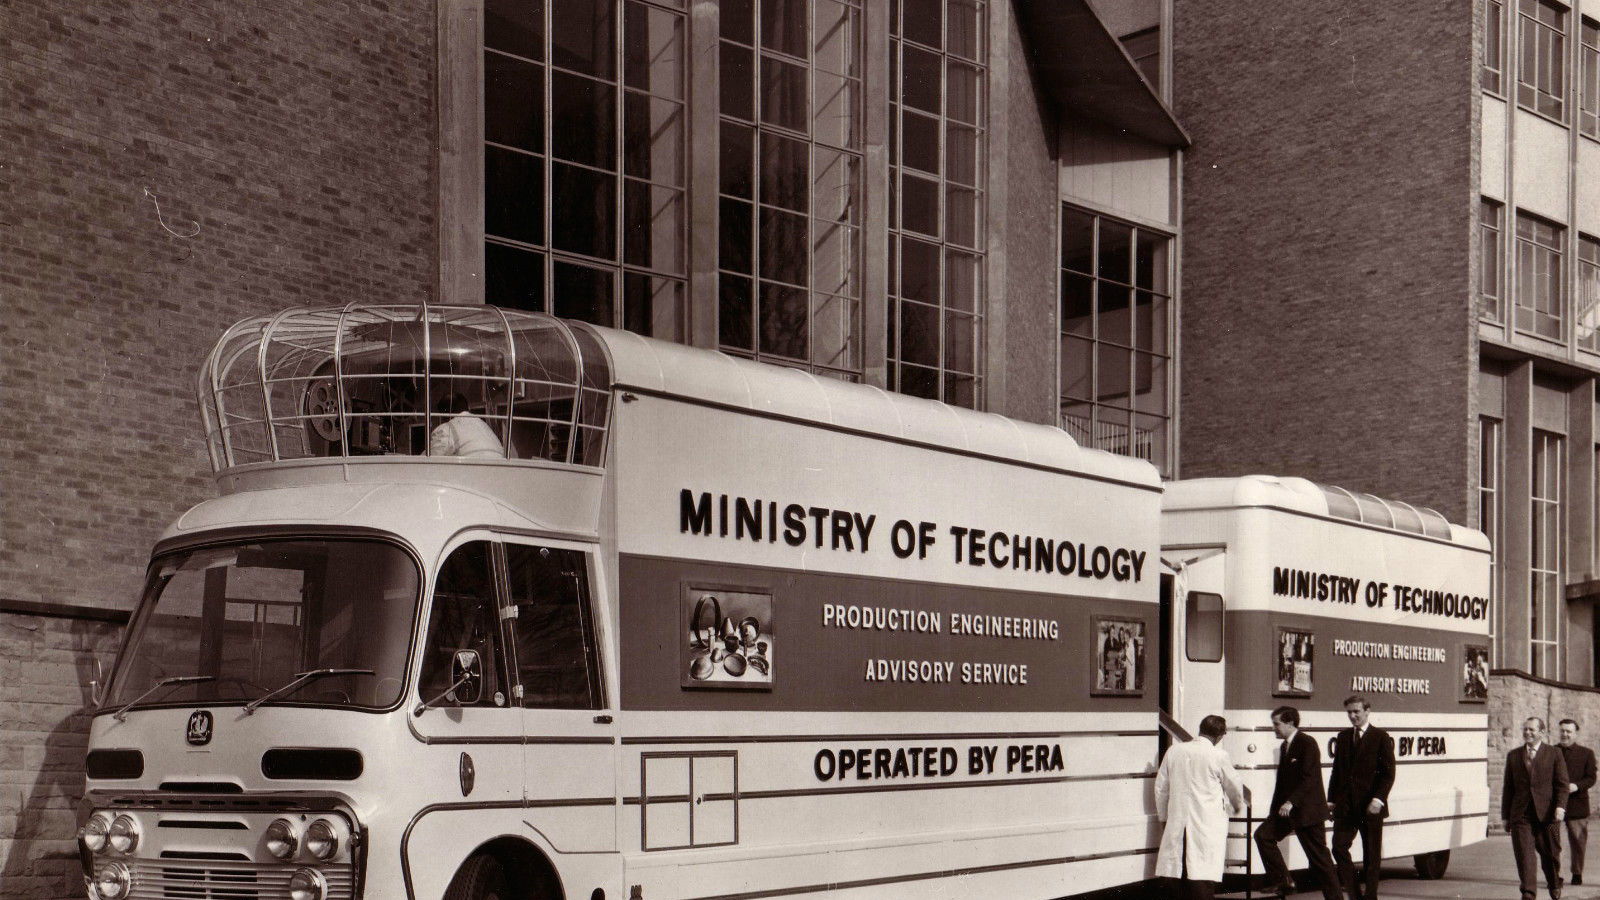 1967 Ministry of Technology mobile cinema. Image via eBay. 